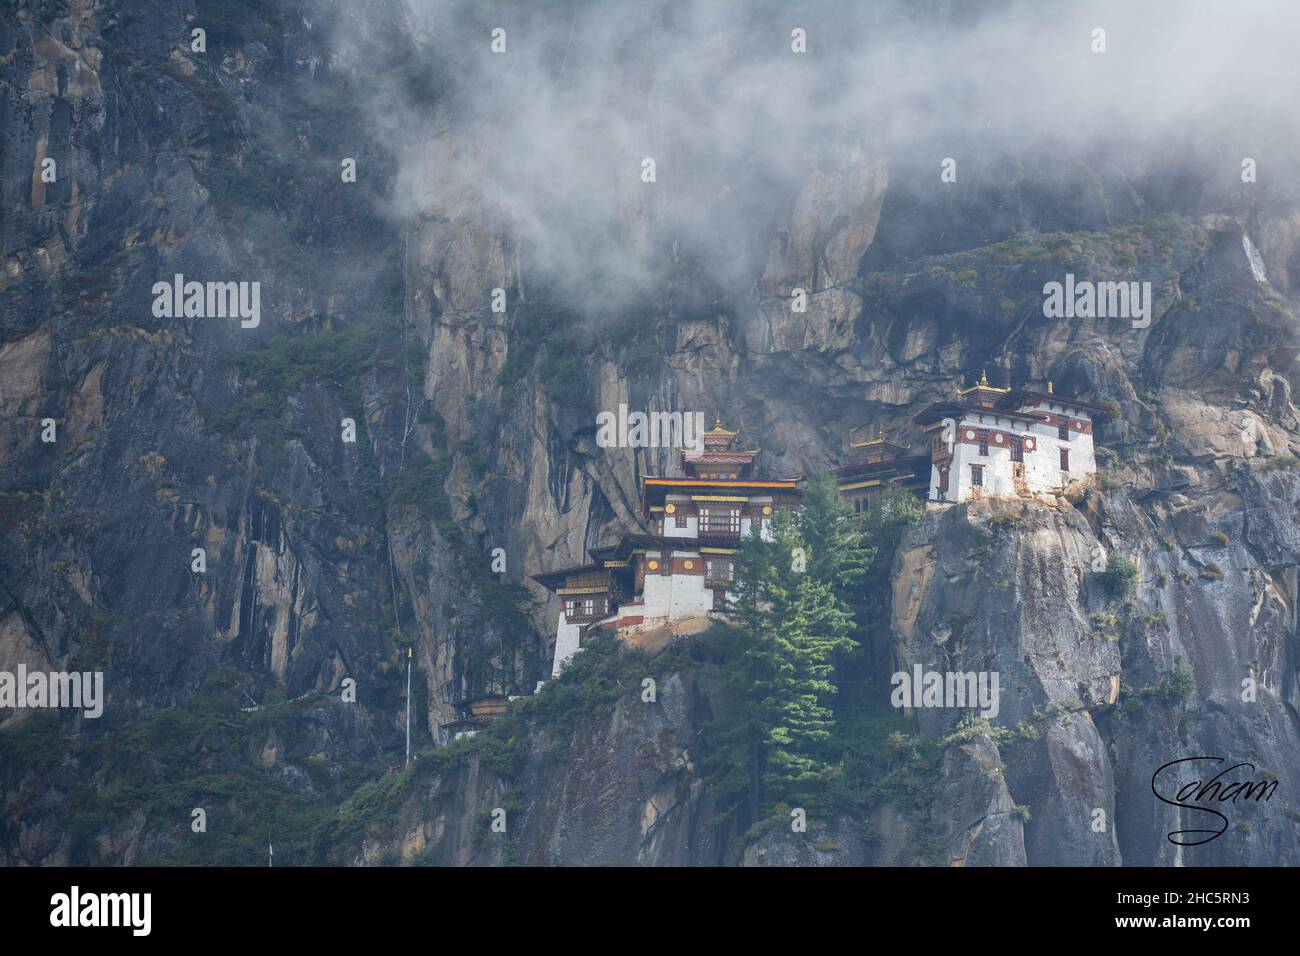 Aerial view of the beautiful Taktsang Palphug Monastery in Paro, Bhutan with fog everywhere Stock Photo